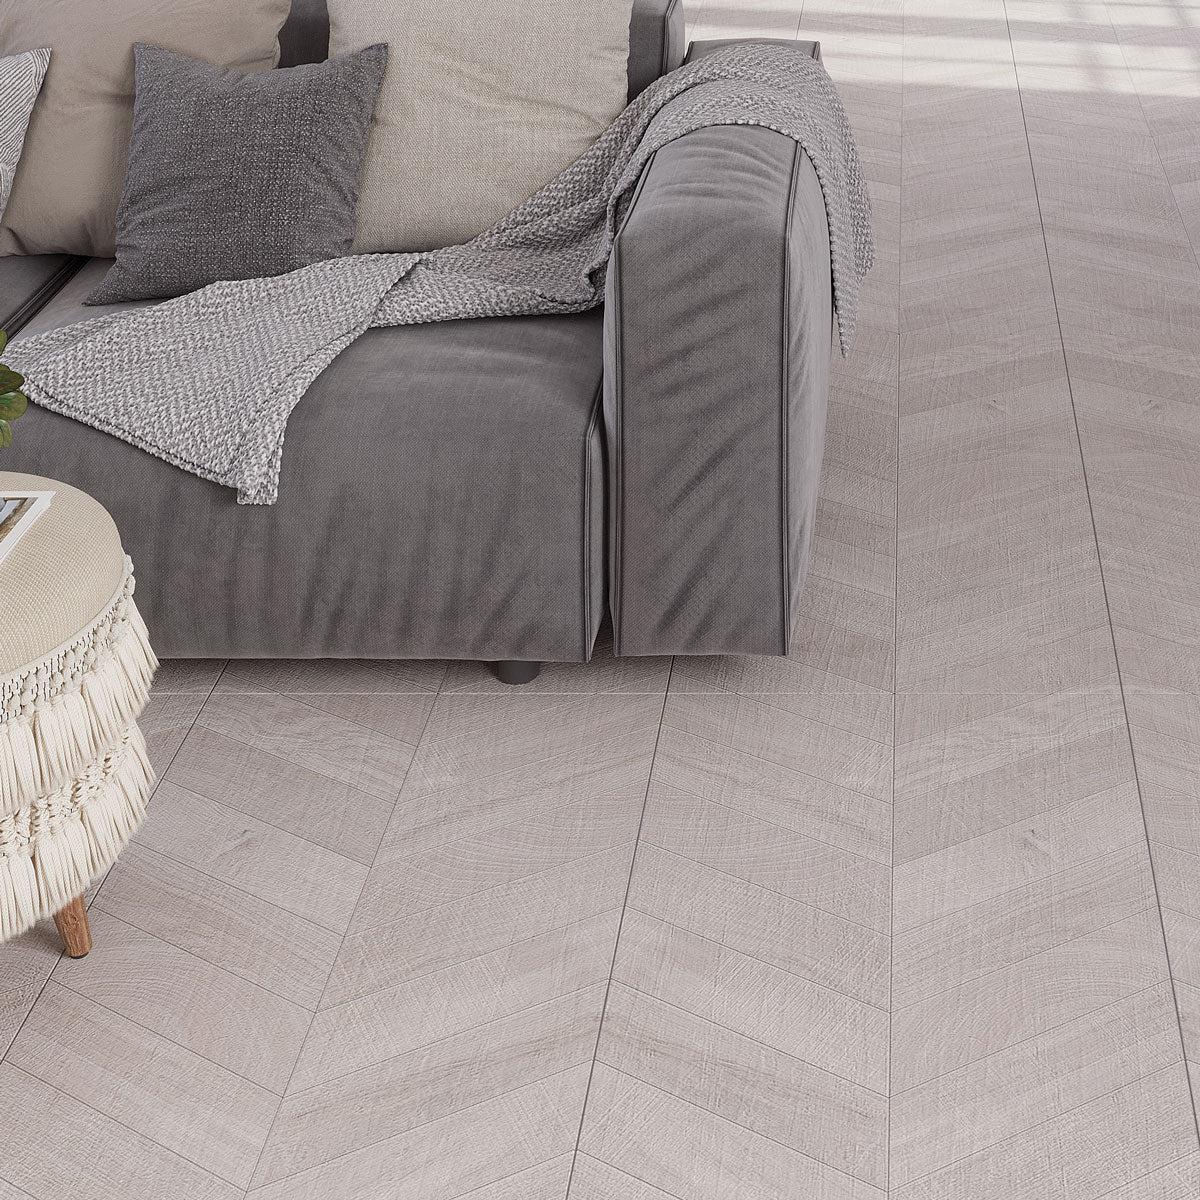 Japandi Chevron Gray Wood-Look Tile Flooring